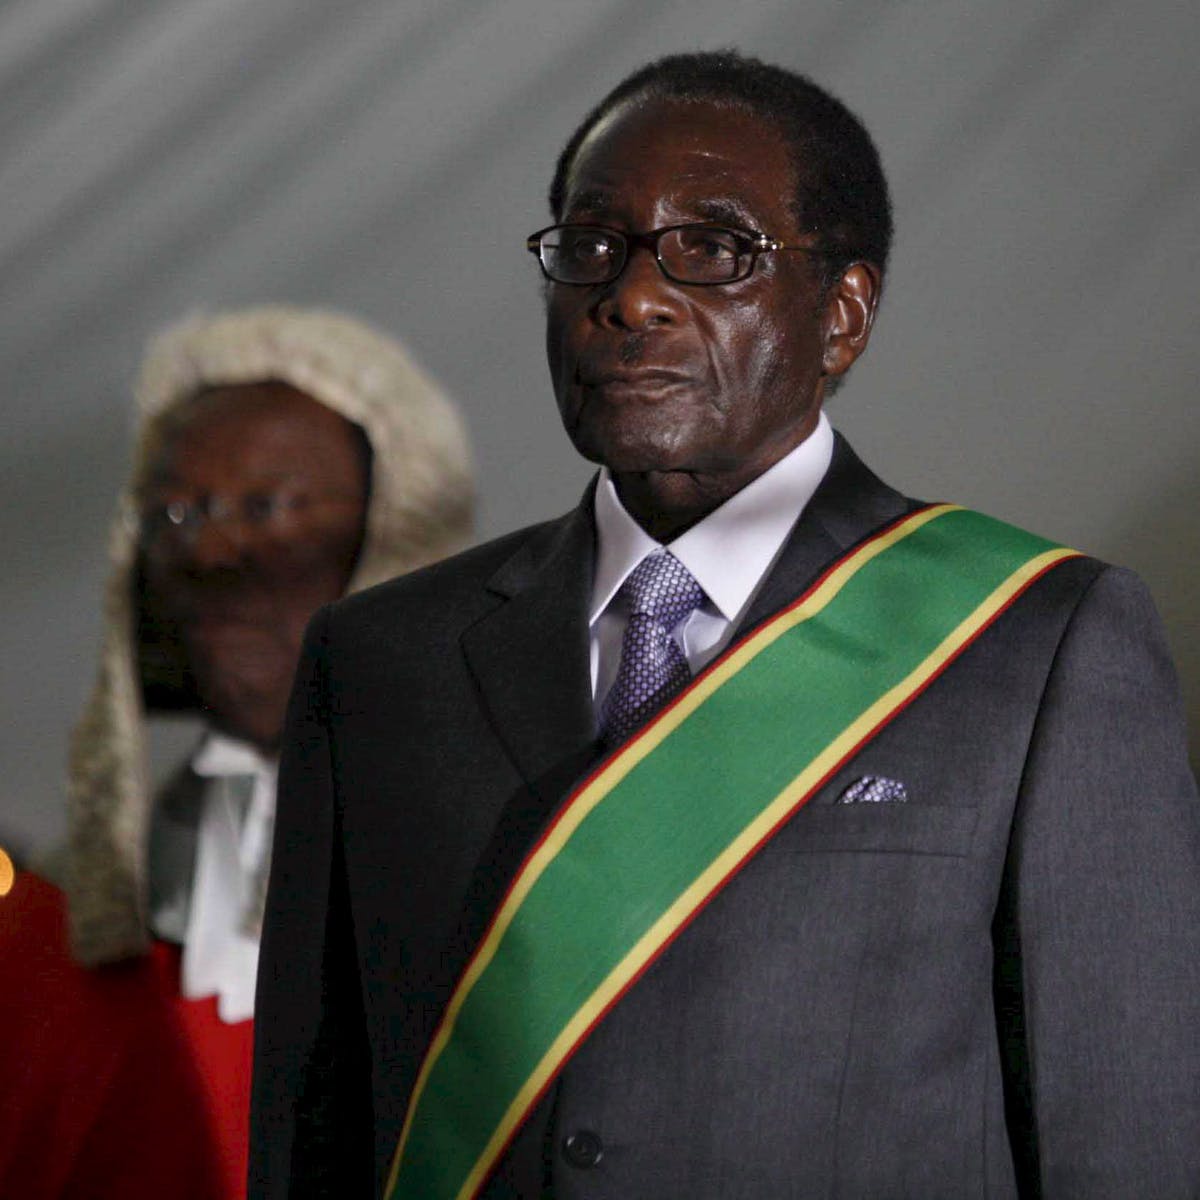 National hero of Zimbabwe - Robert Mugabe